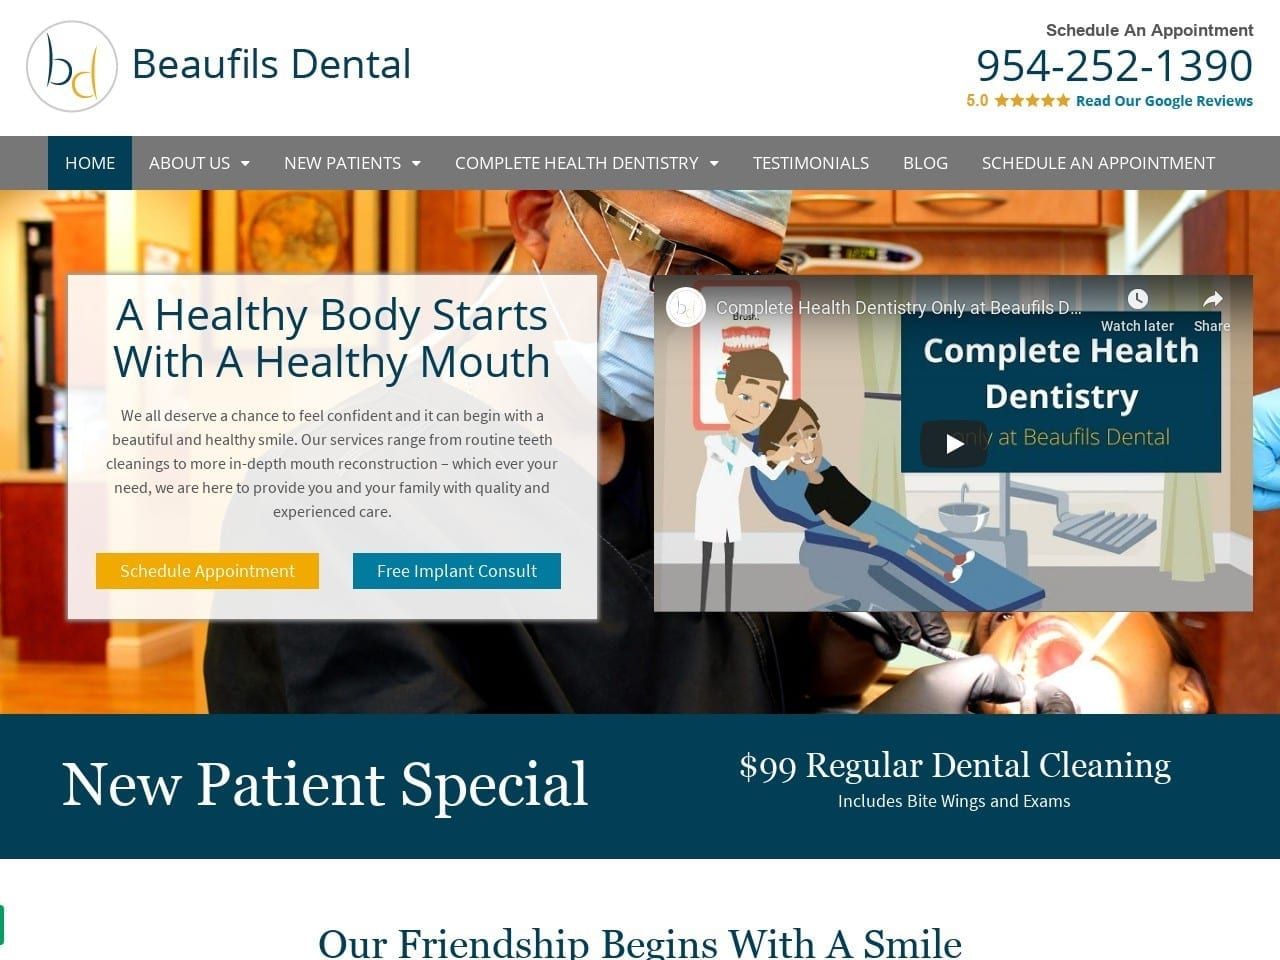 Le Dentist Website Screenshot from ledentist.com